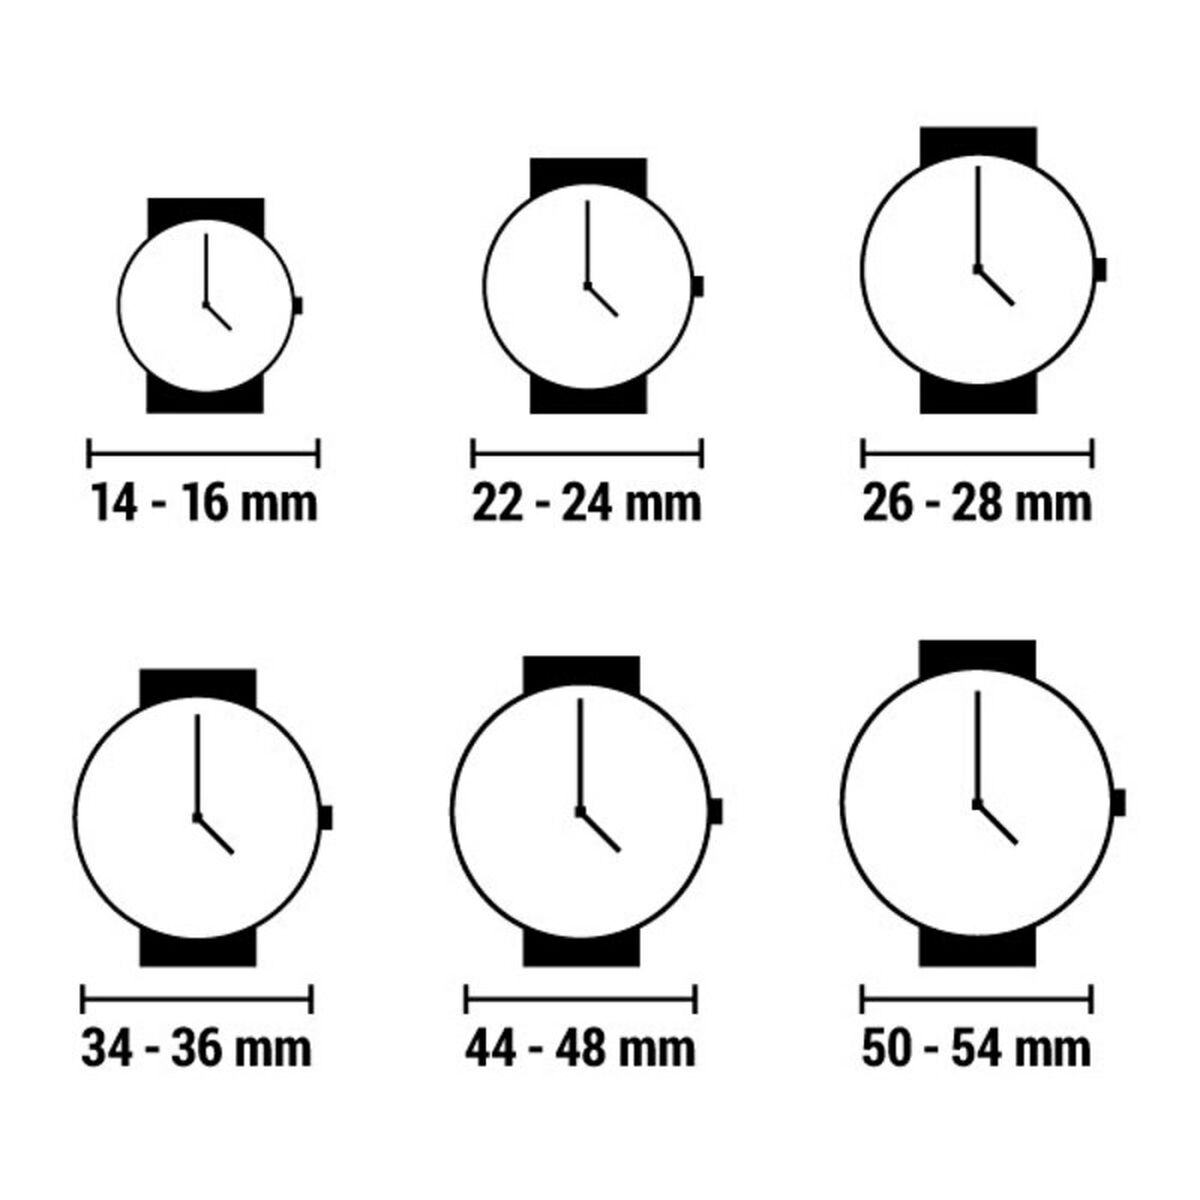 Reloj Hombre Nautica NAI10006G (Ø 45 mm)